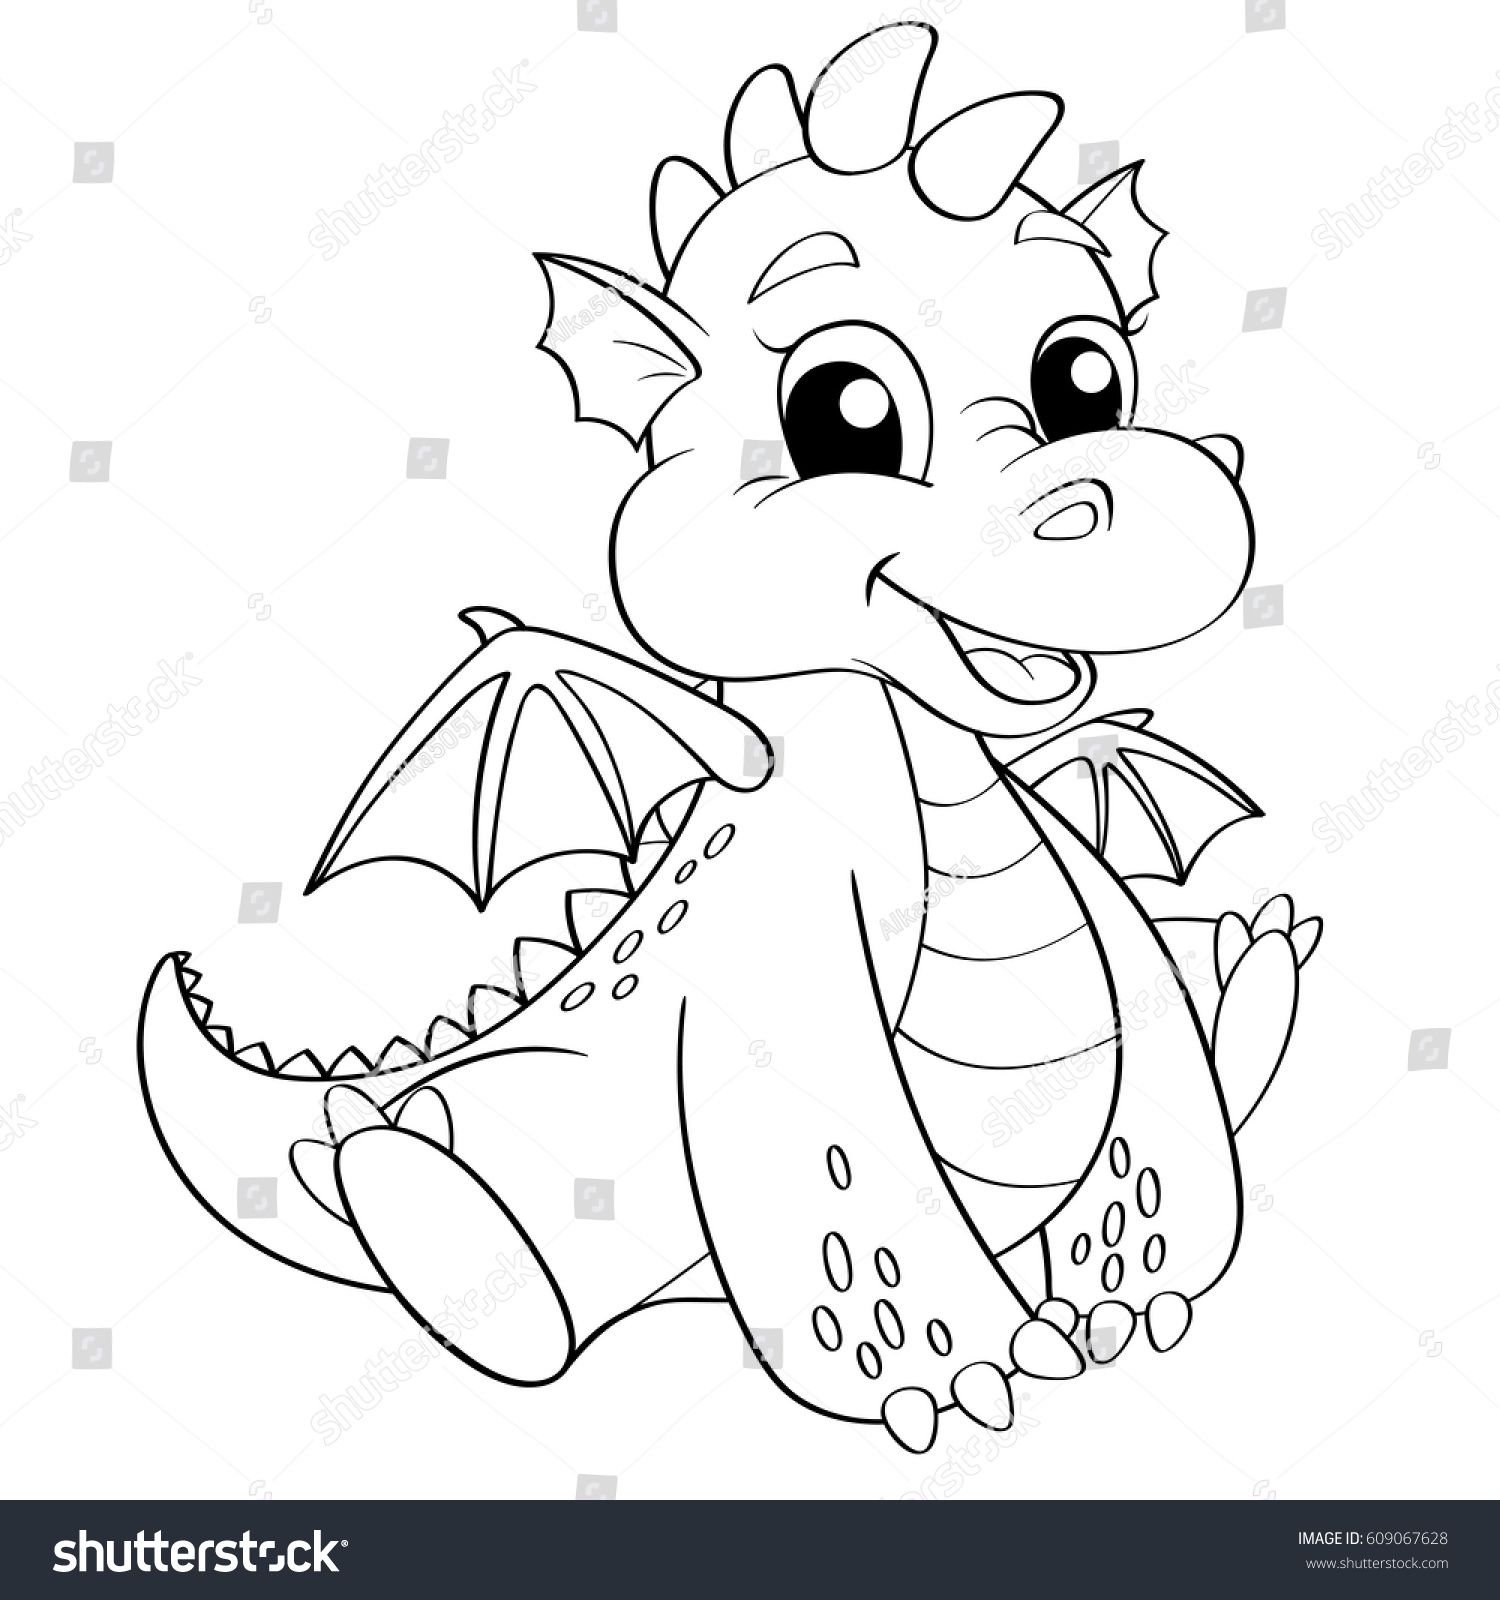 Cute cartoon dragon.